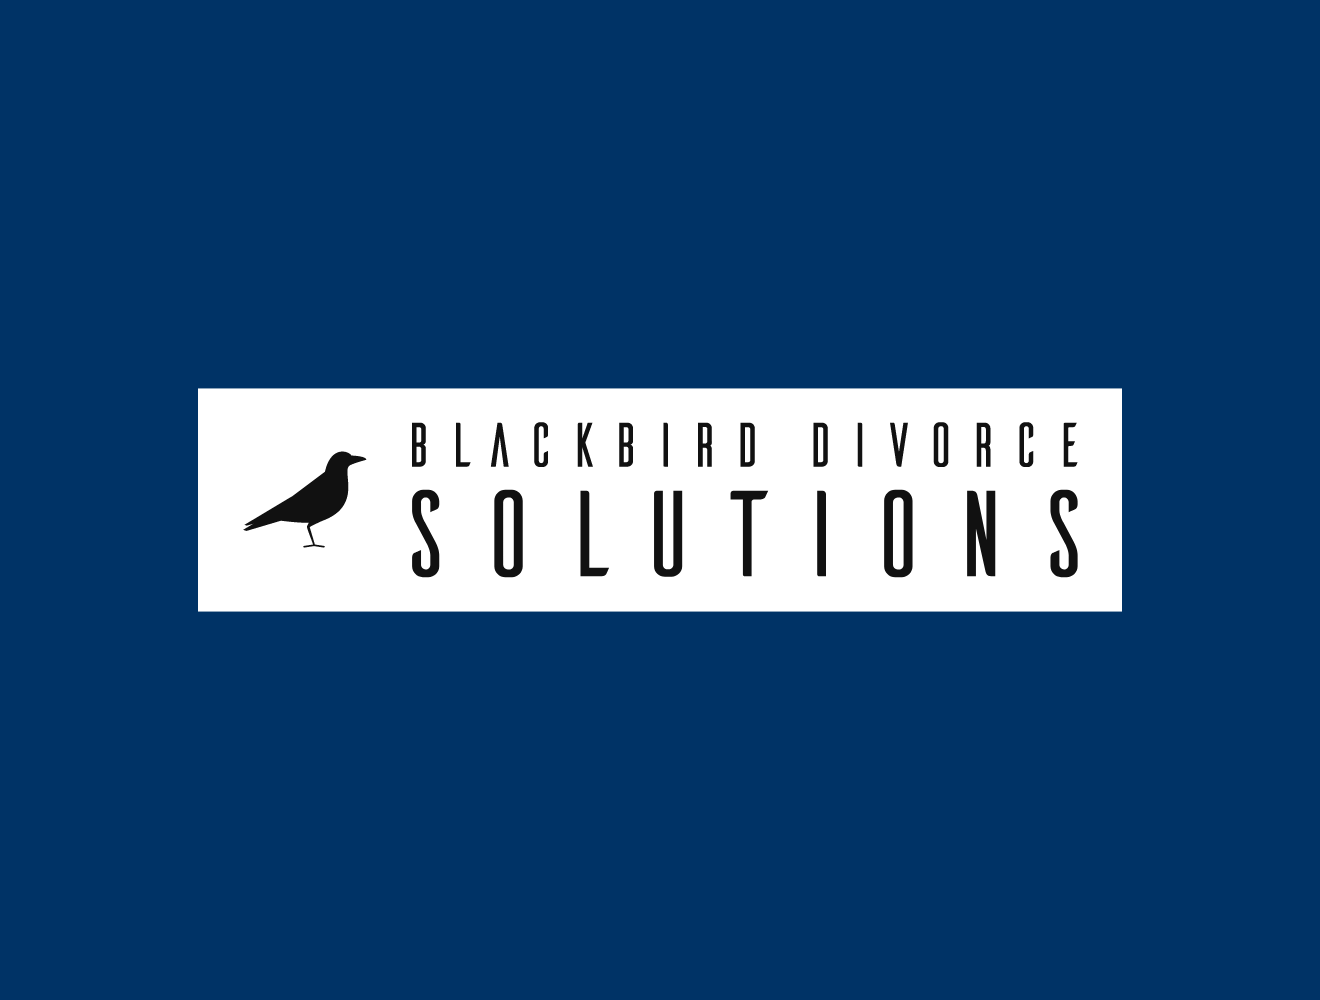 BlackBird Divorce Solutions